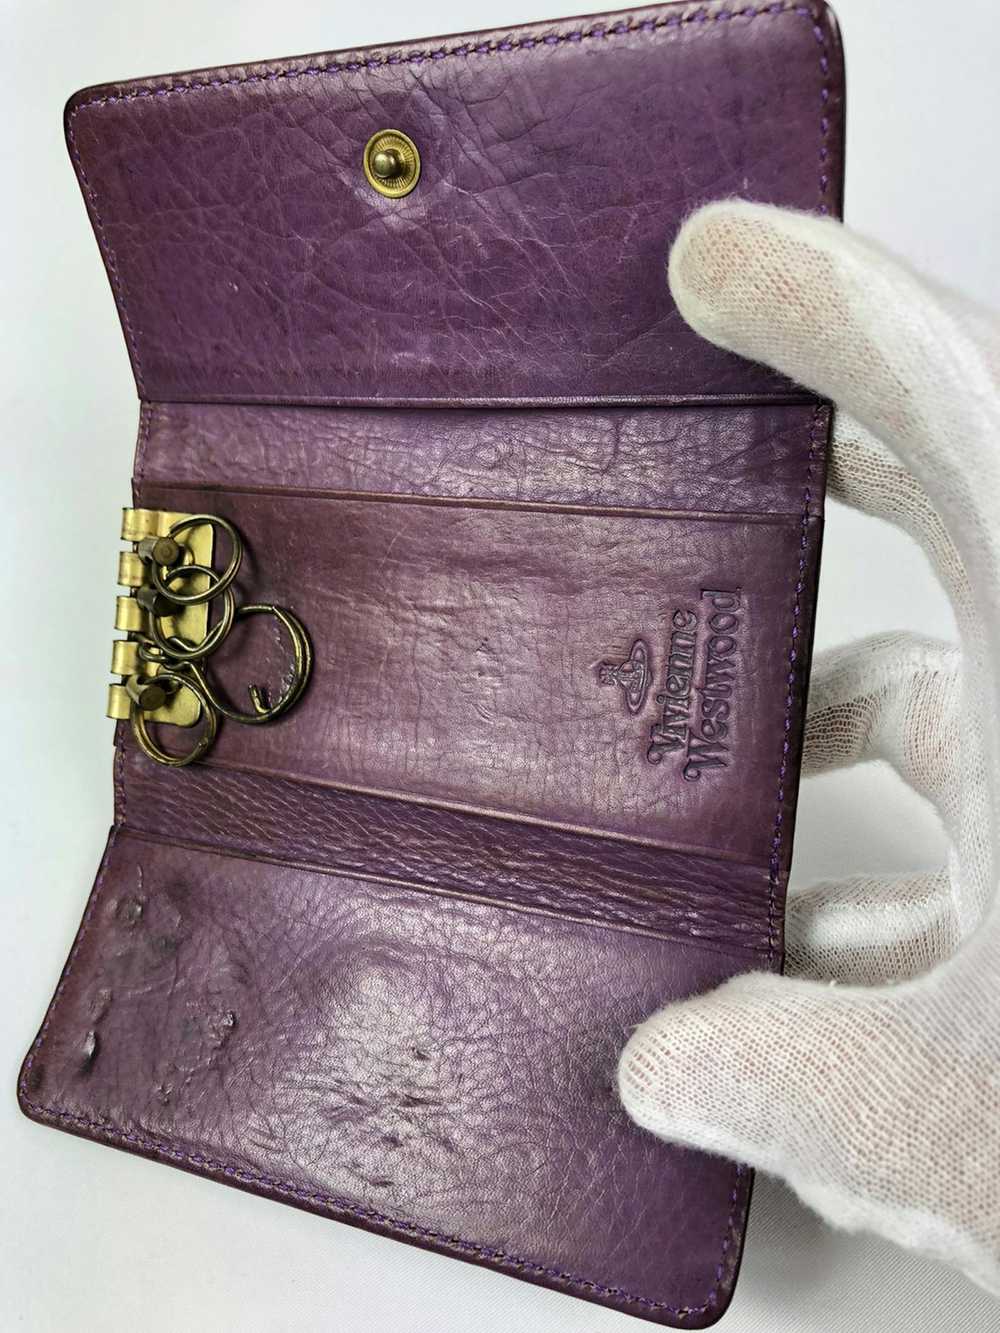 Vivienne Westwood Orb leather key holder - image 2